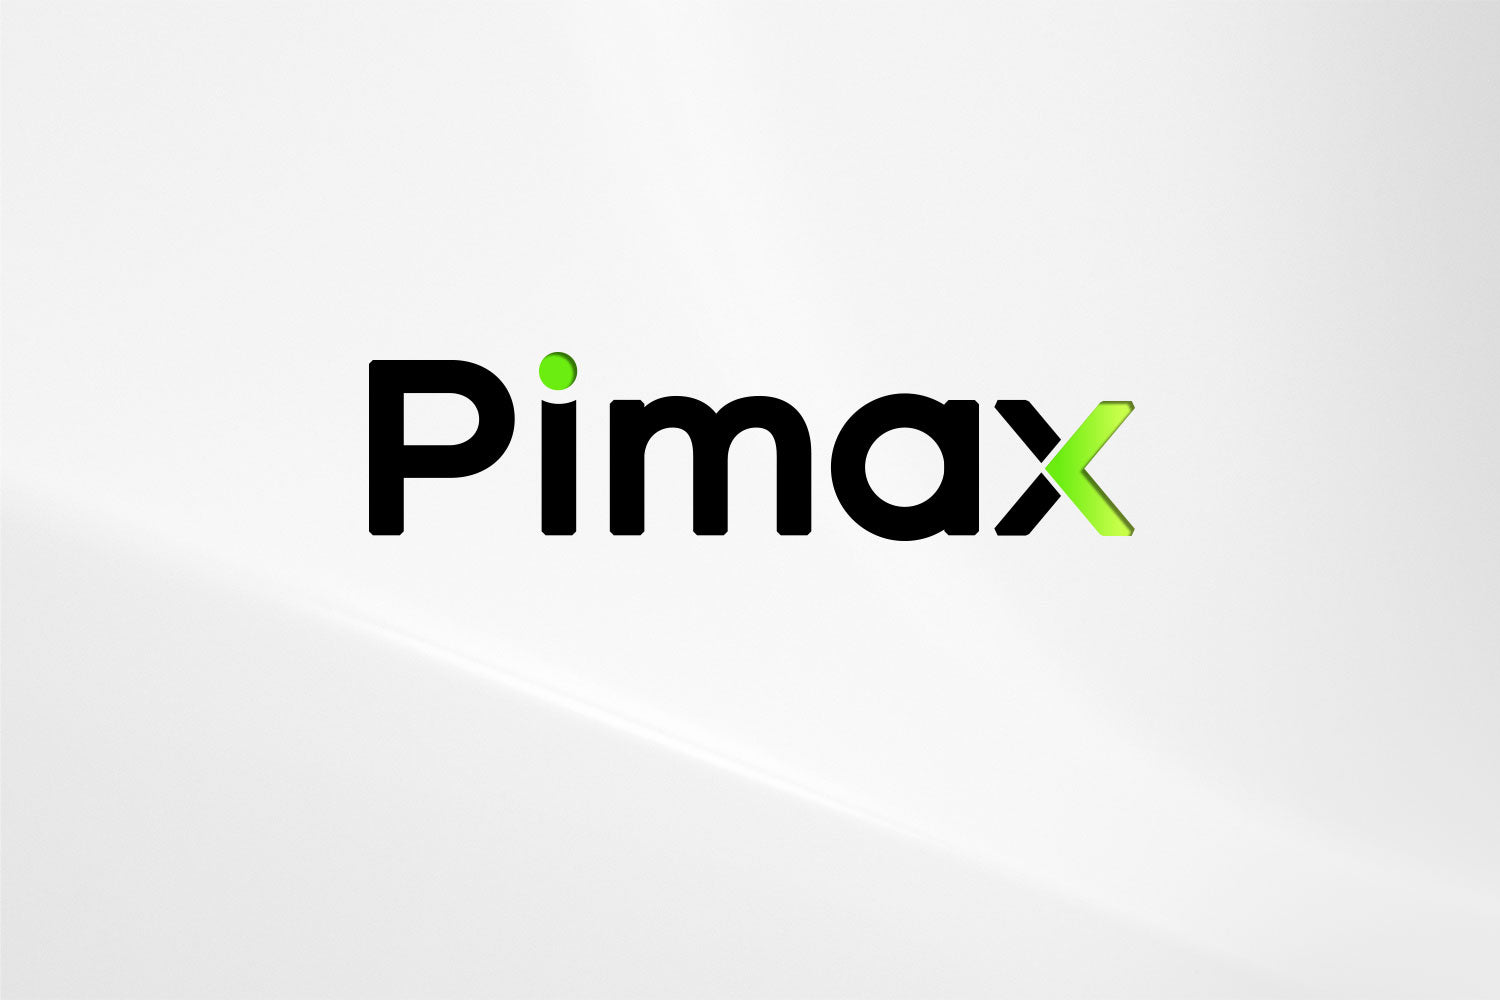 Pimax Progress Update - May 31